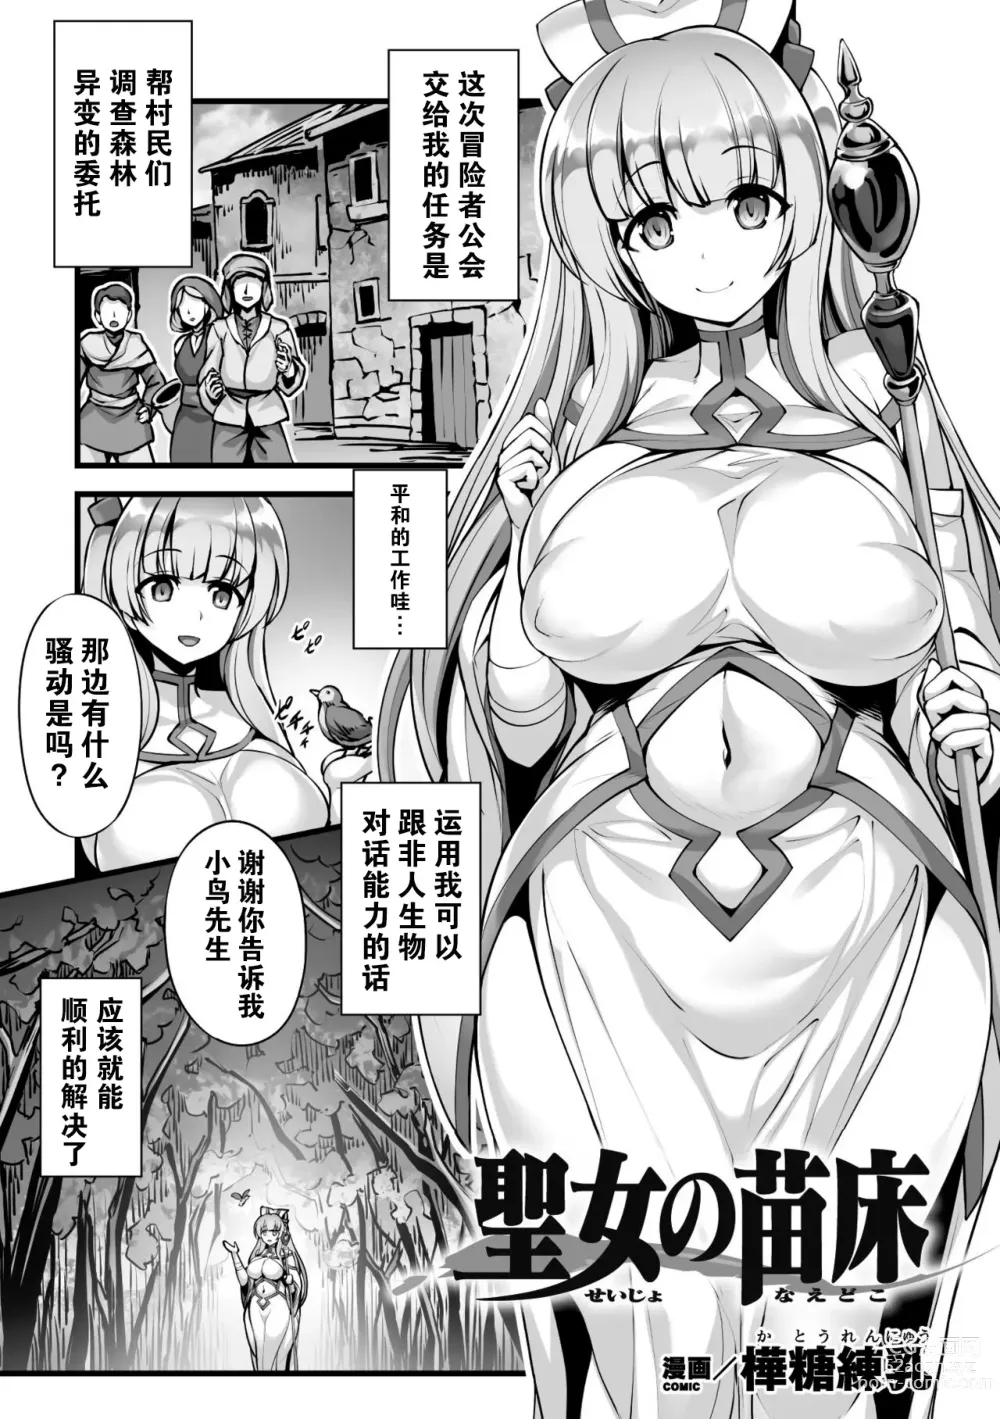 Page 1 of manga 苗床圣女